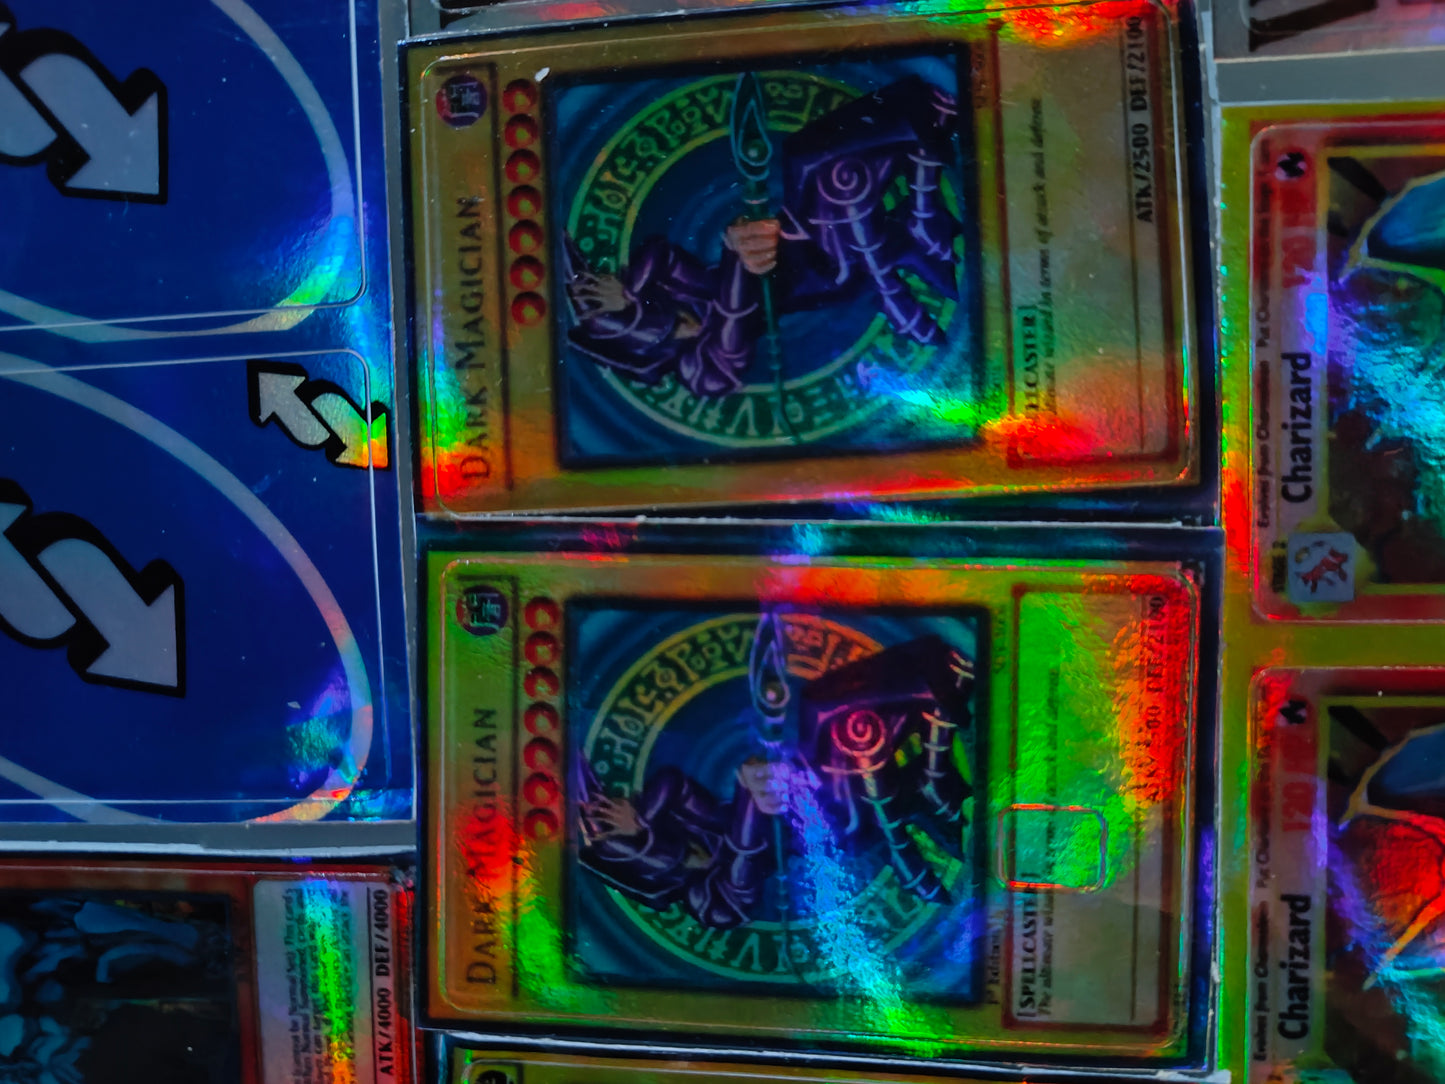 YuGiOh - Dark Magician Holographic Credit Card Sticker (Please Read Description)